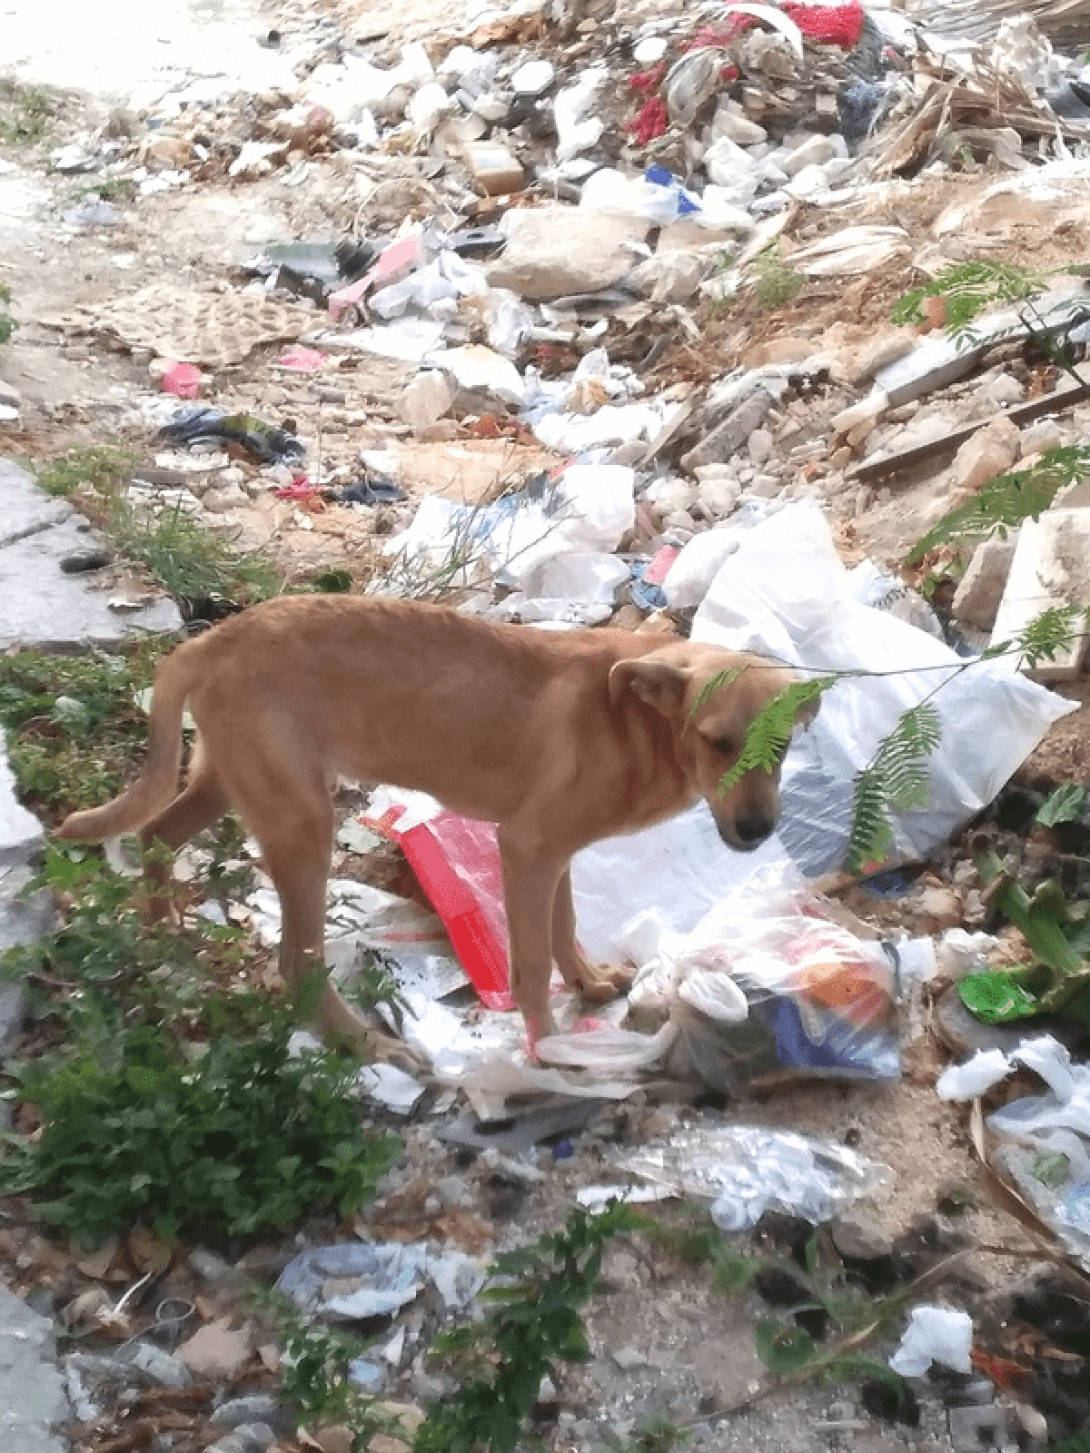 Perro husmeando por comida en la basura.